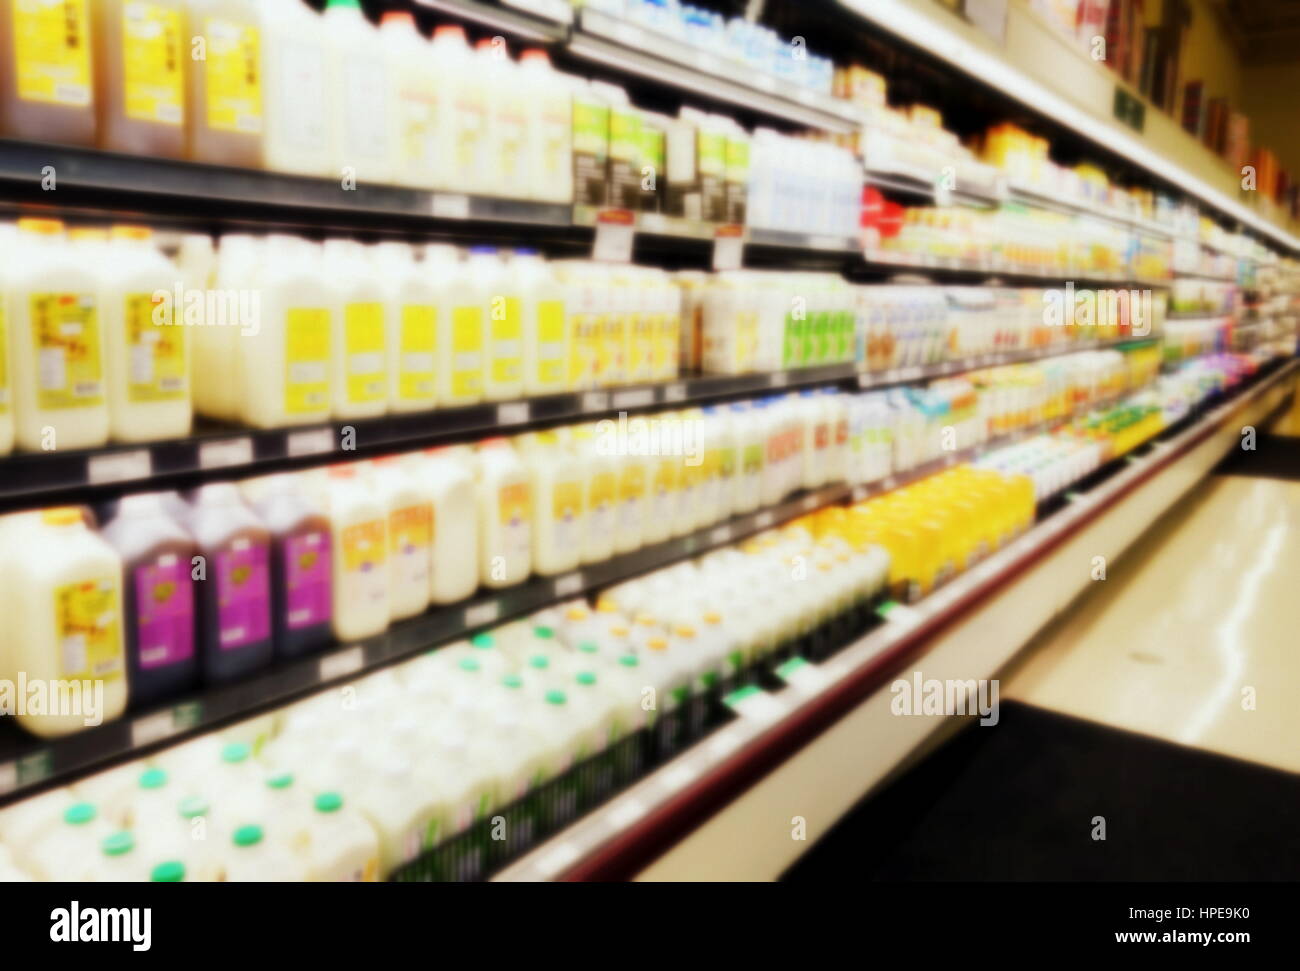 Blurred supermarket shelves Stock Photo